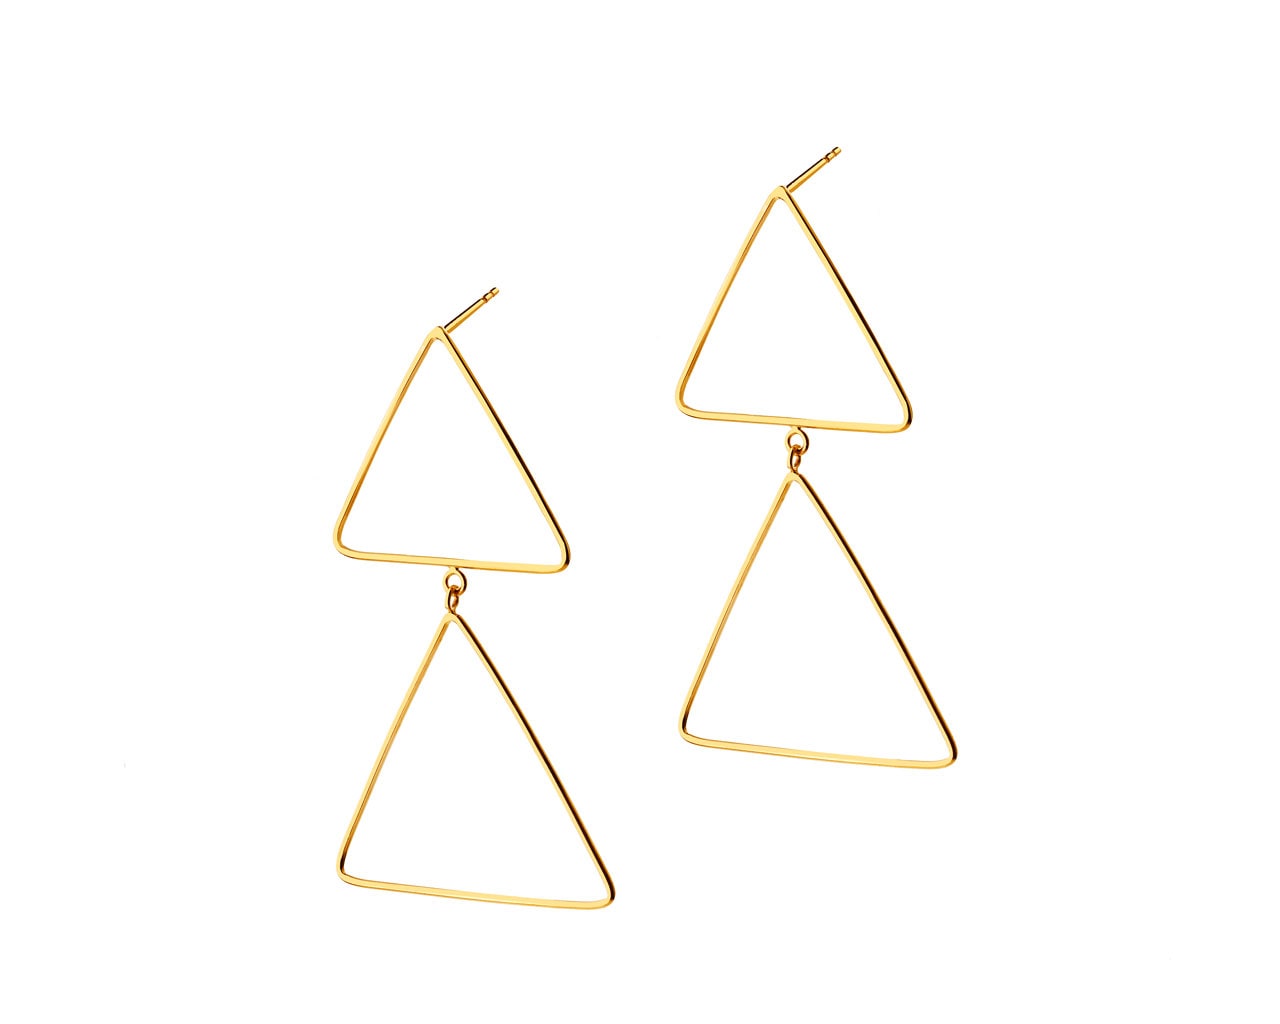 8ct Yellow Gold Earrings 